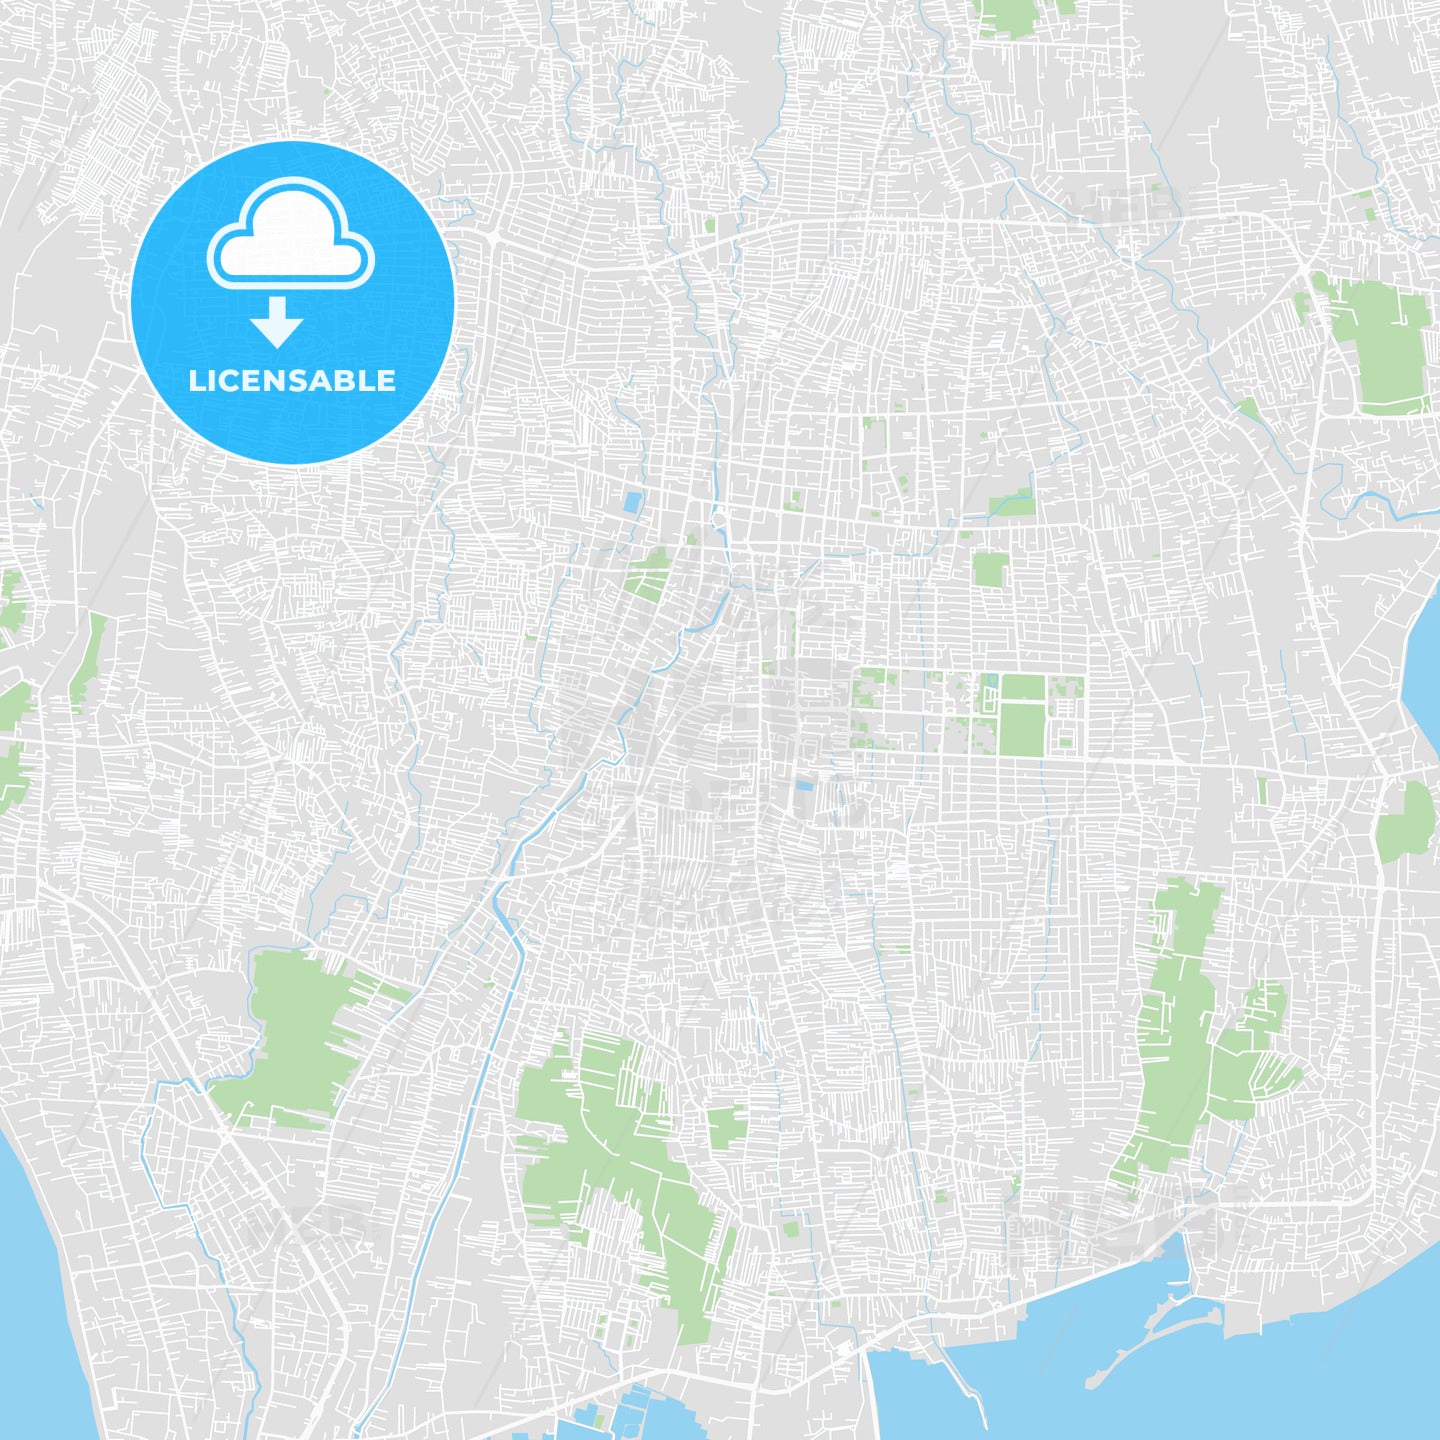 Printable map of Denpasar, Indonesia